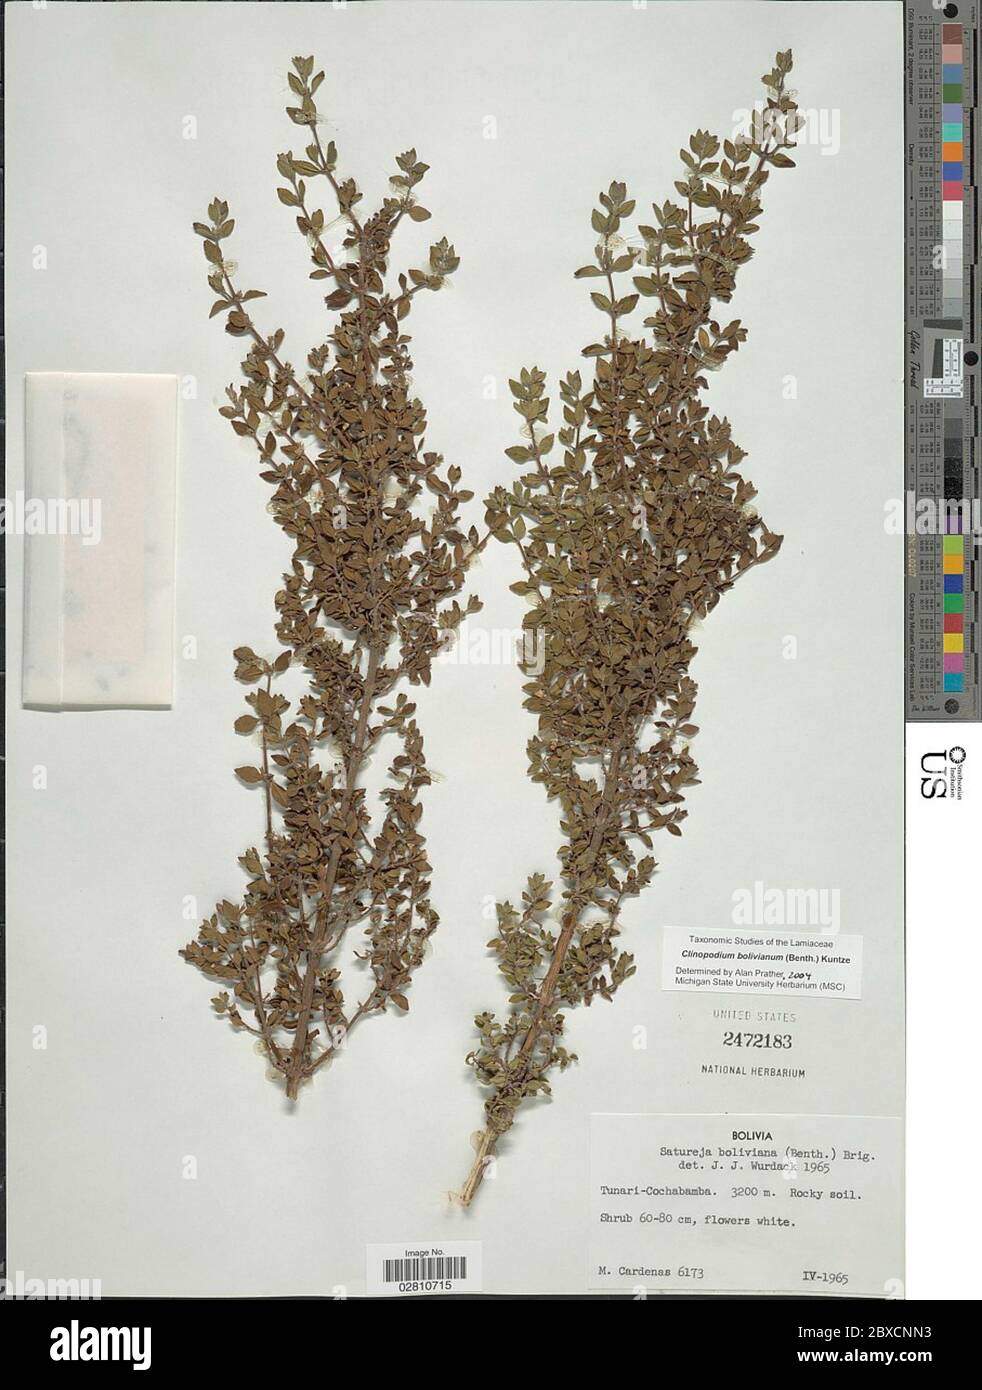 Clinopodium bolivianum Benth Kuntze Clinopodium bolivianum Benth Kuntze. Stock Photo